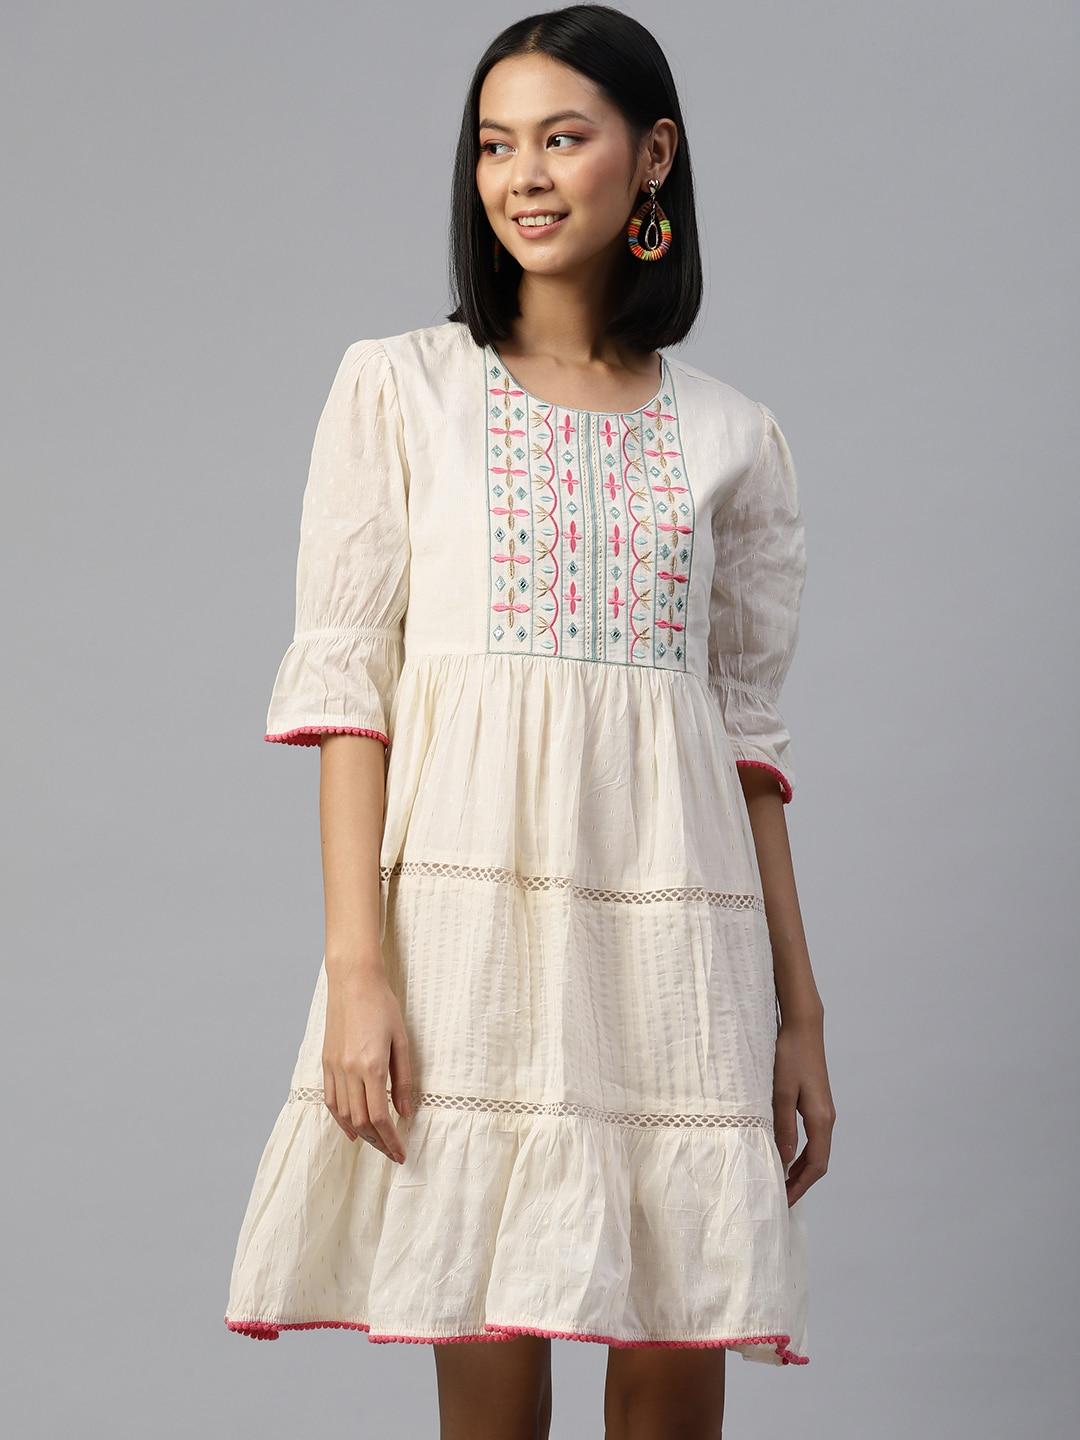 serona fabrics off white floral embroidered cotton ethnic a-line dress